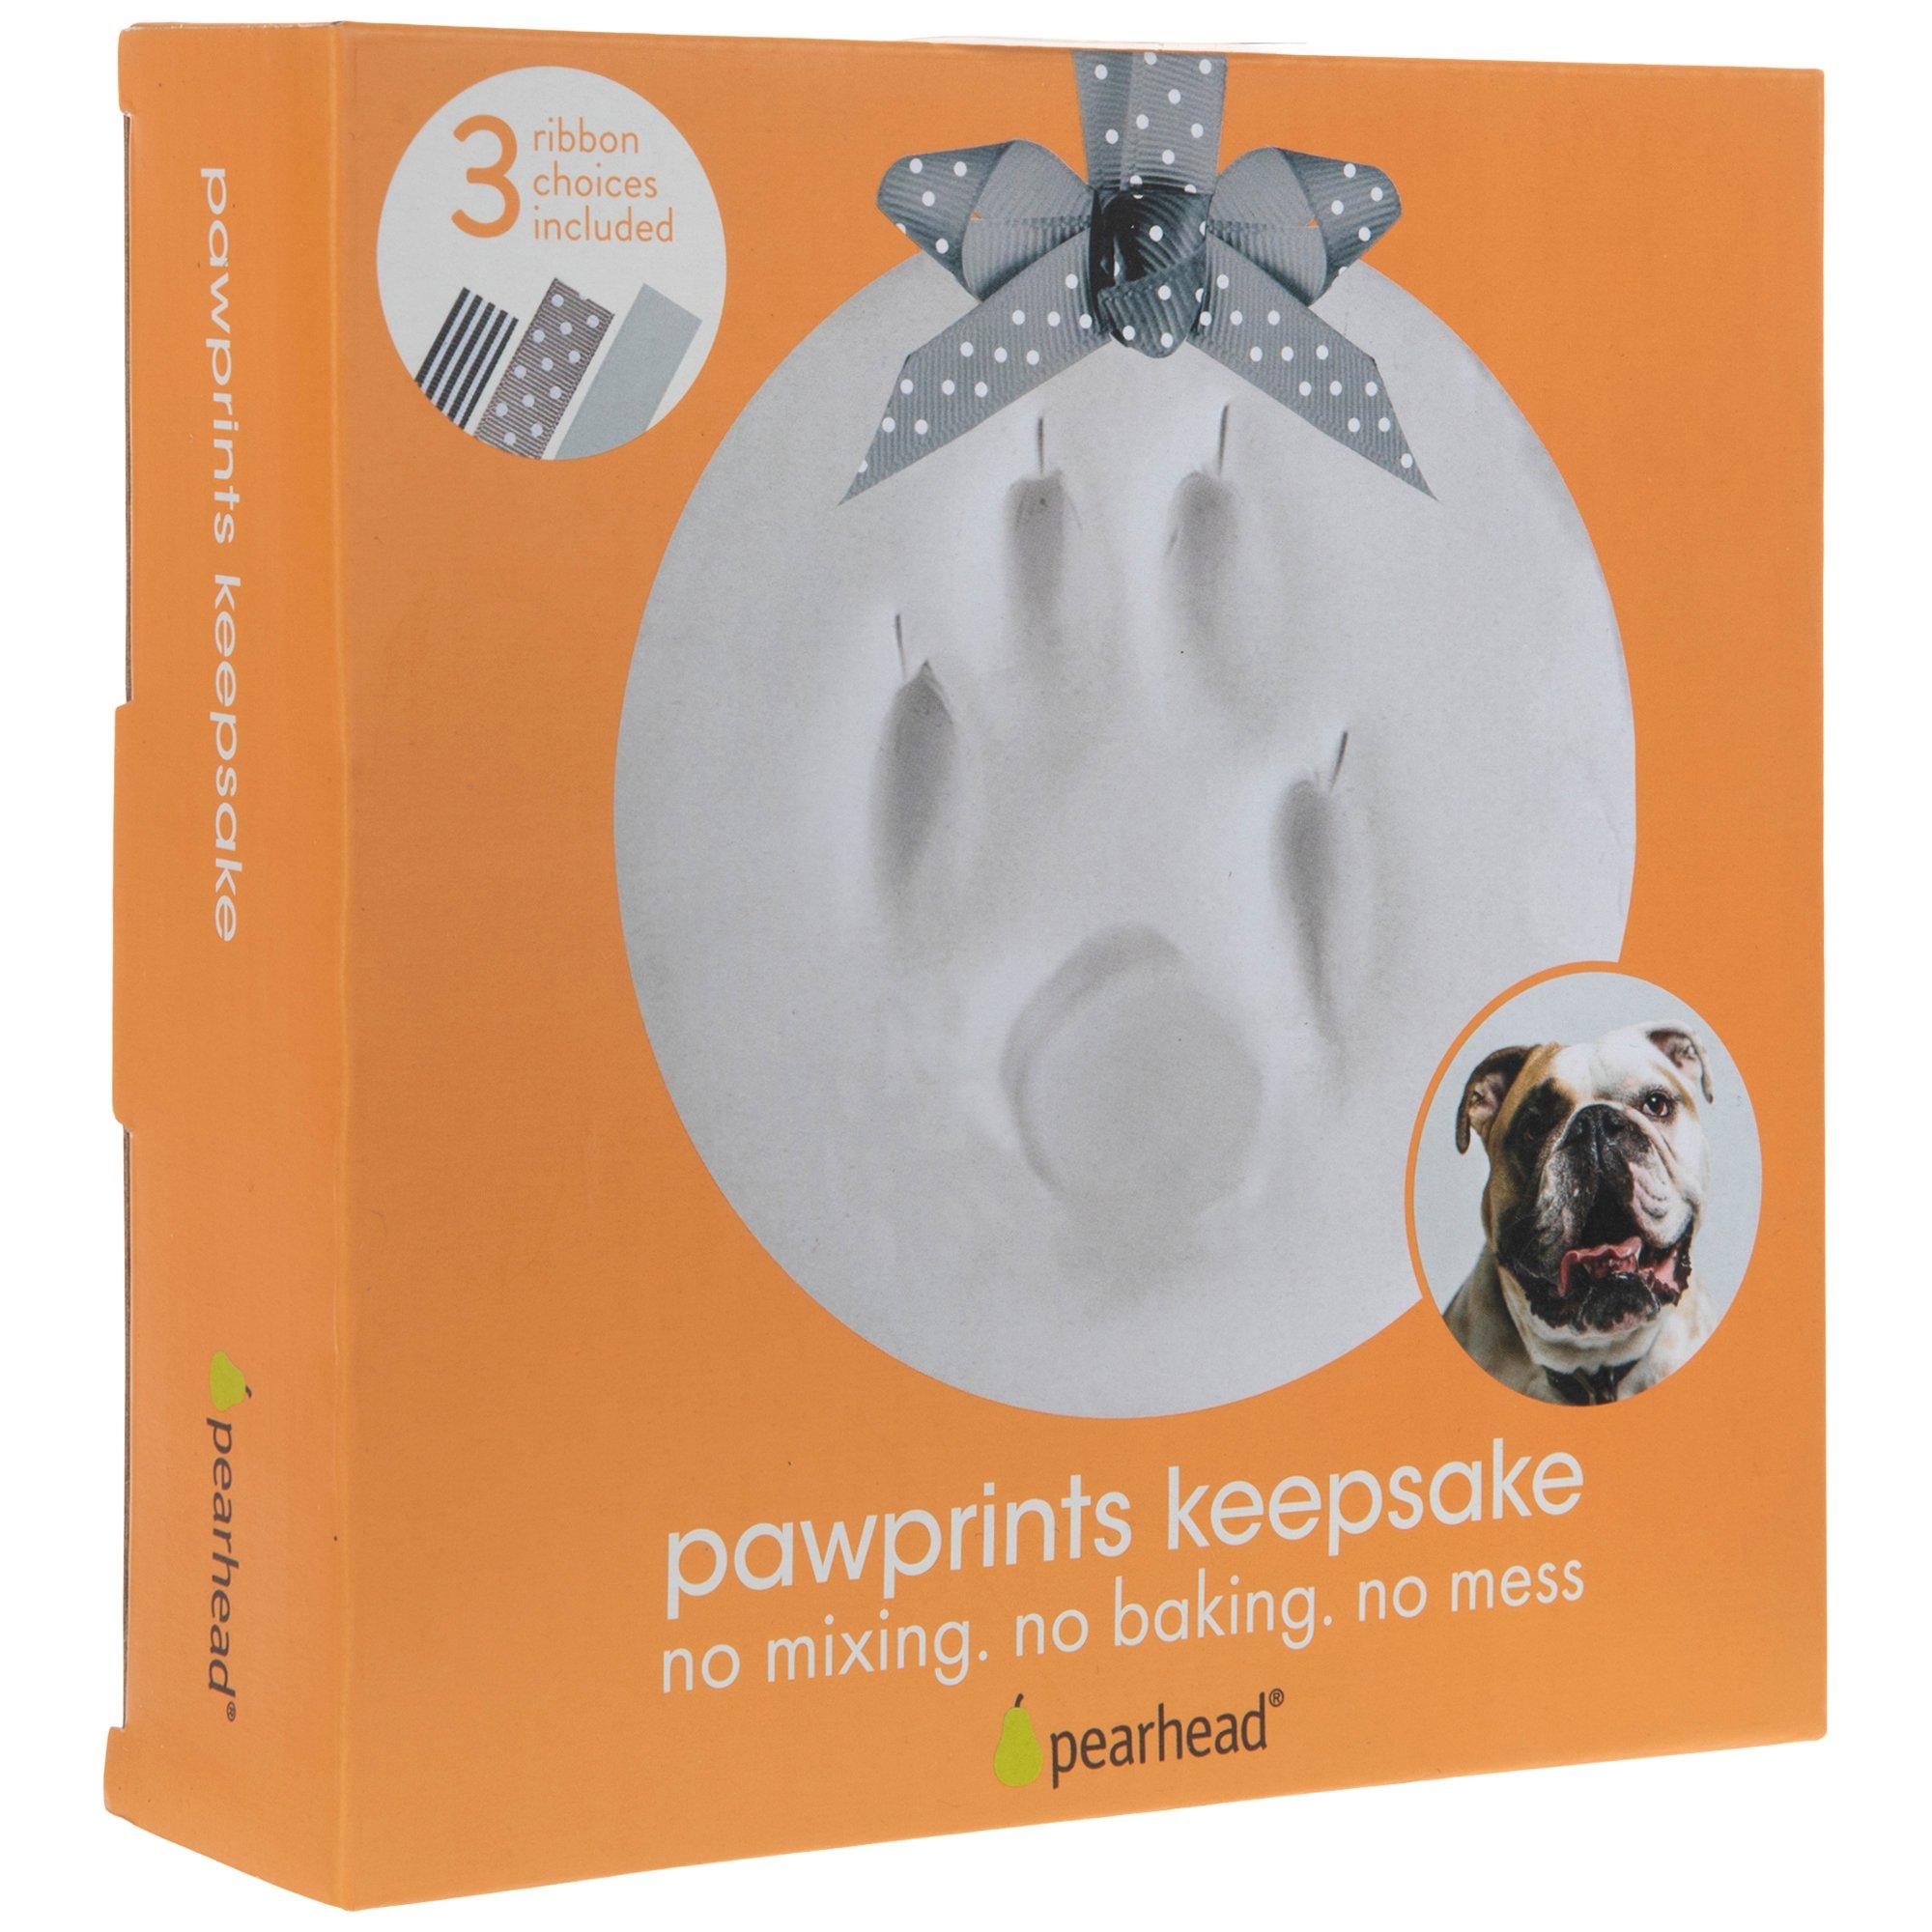  Pet Paw Print Impression Kit, Dog Ink Paw Print Kit, Pet Paw  Print Kit, an Easy to Use Paw Print Stamp Pad for Dogs